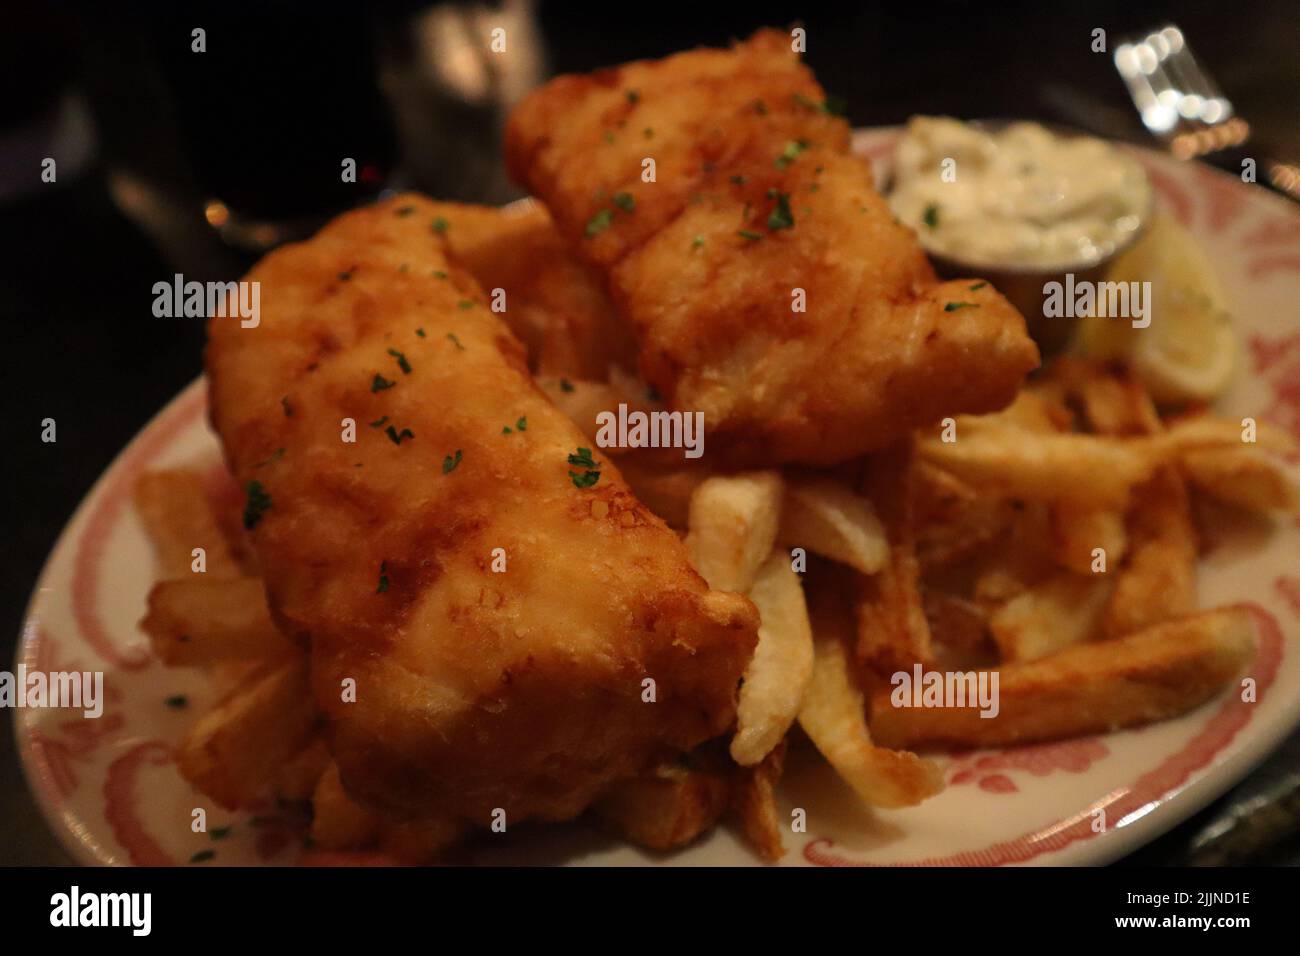 A closeup of a fish and chips dish with tartar sauce and lemon Stock Photo